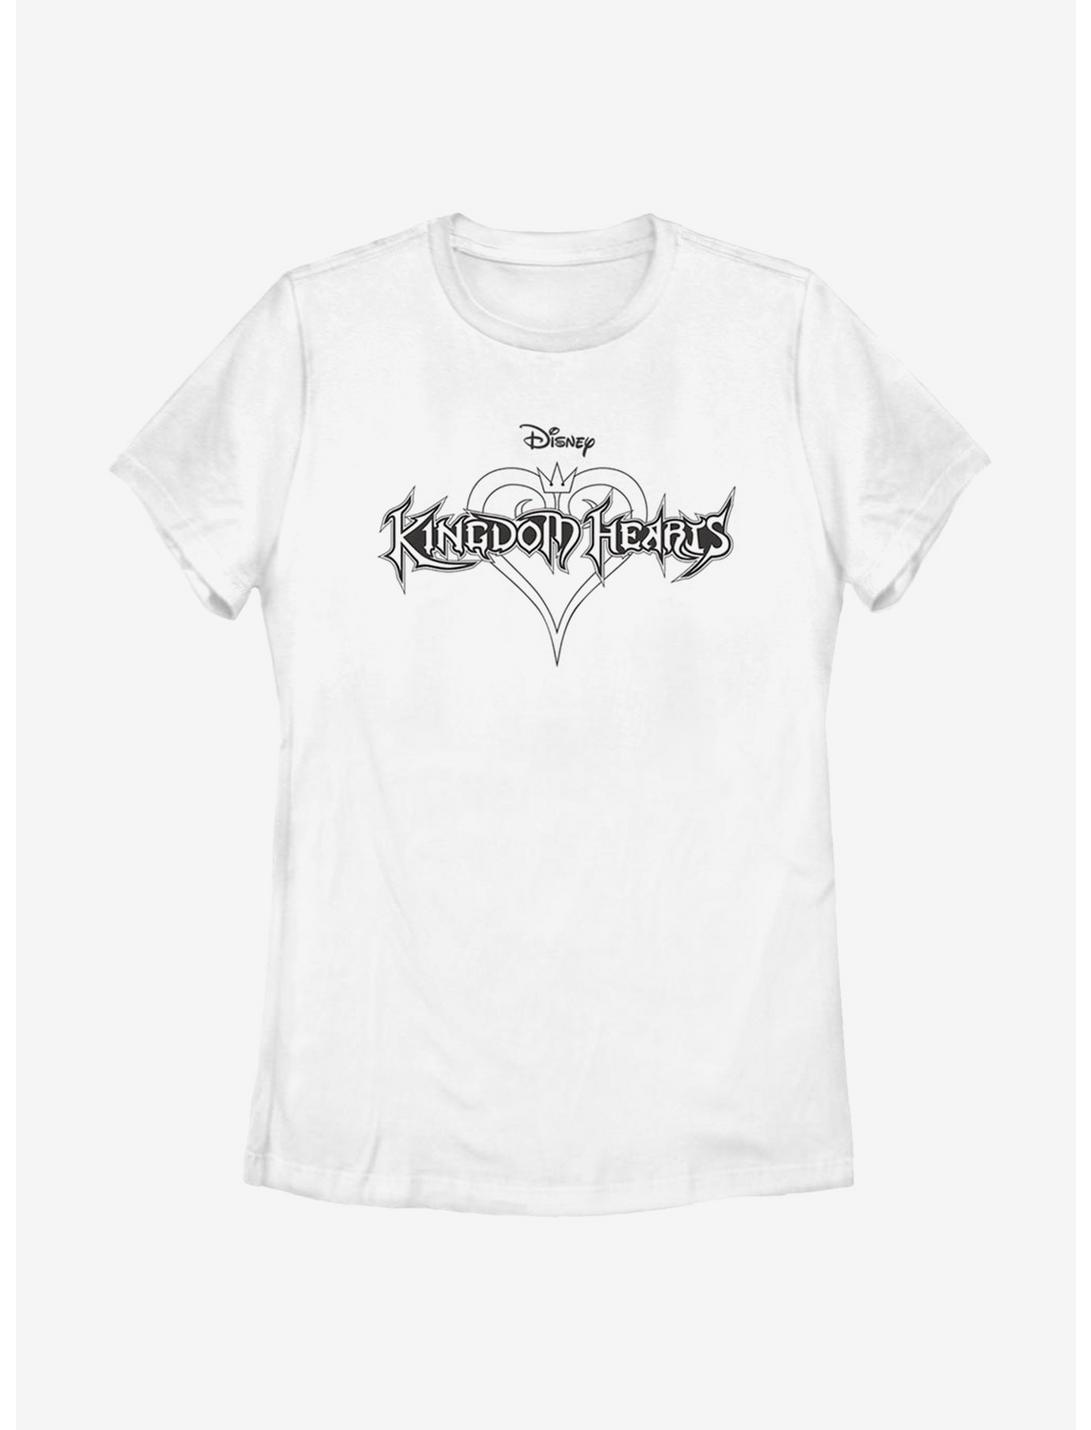 Disney Kingdom Hearts Black And White Womens T-Shirt, WHITE, hi-res